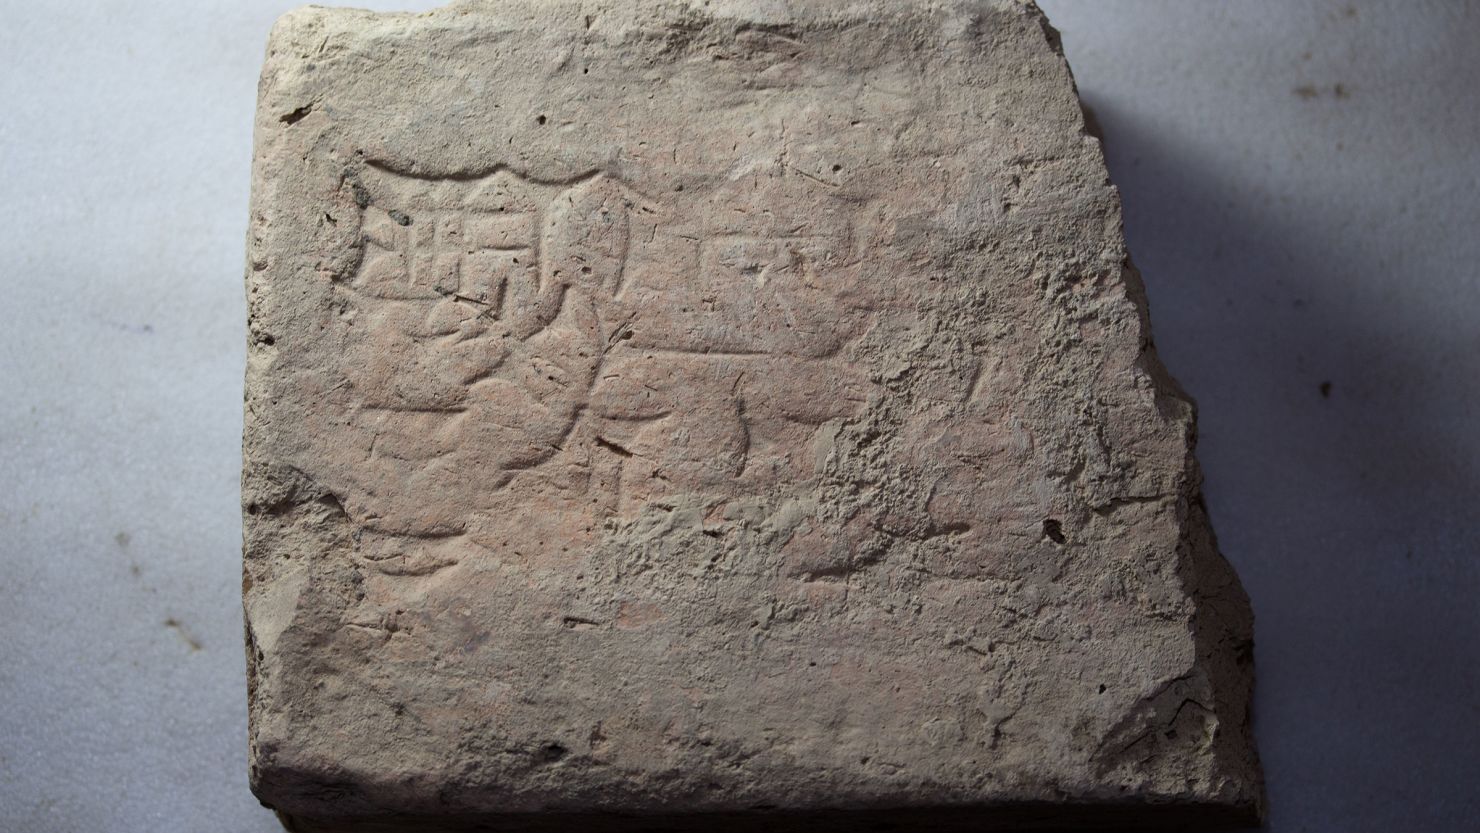 This ancient brick has an inscription associated with Mesopotamian king Adad-Nirari I.